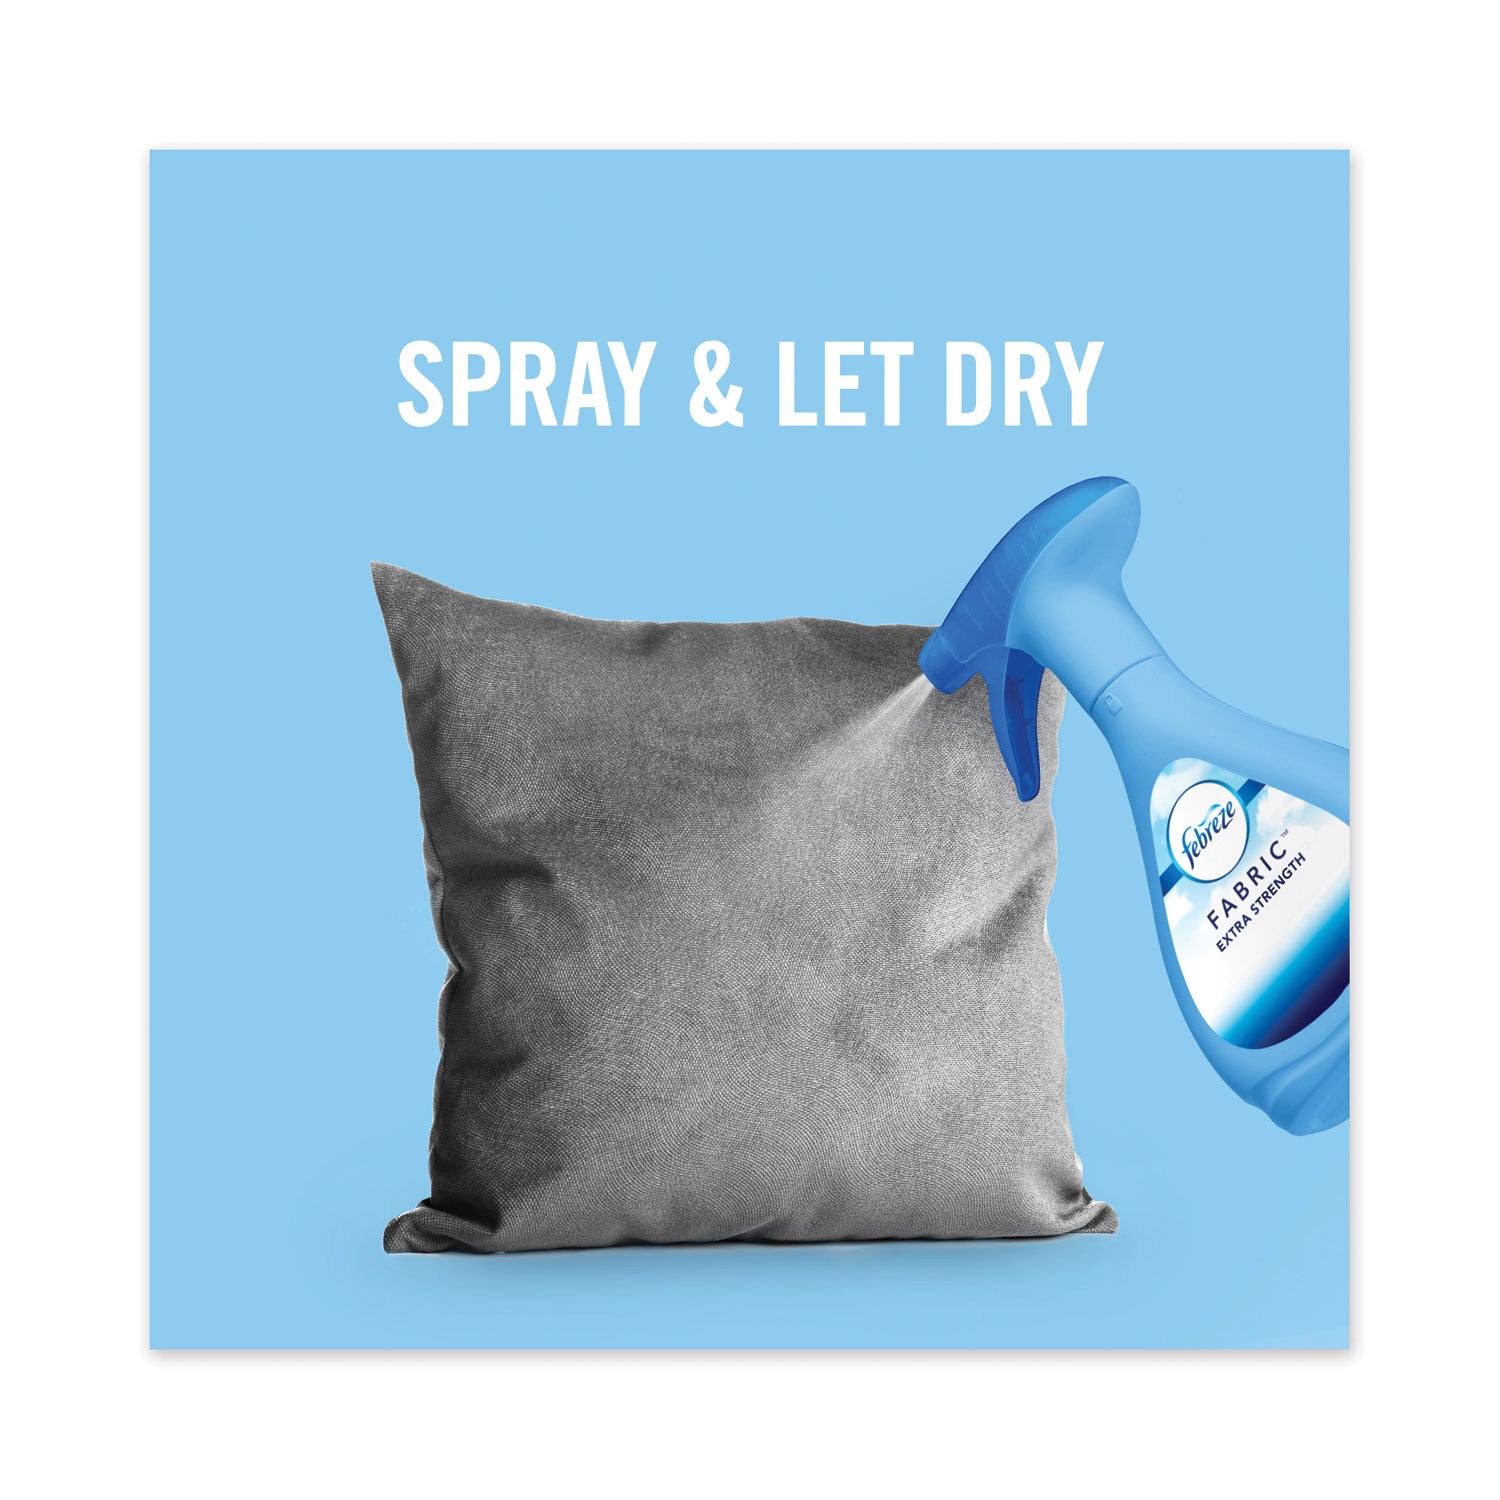 fabric-refresher-odor-eliminator-spring-and-renewal-27-oz-spray-bottle-4-carton_pgc97589 - 6